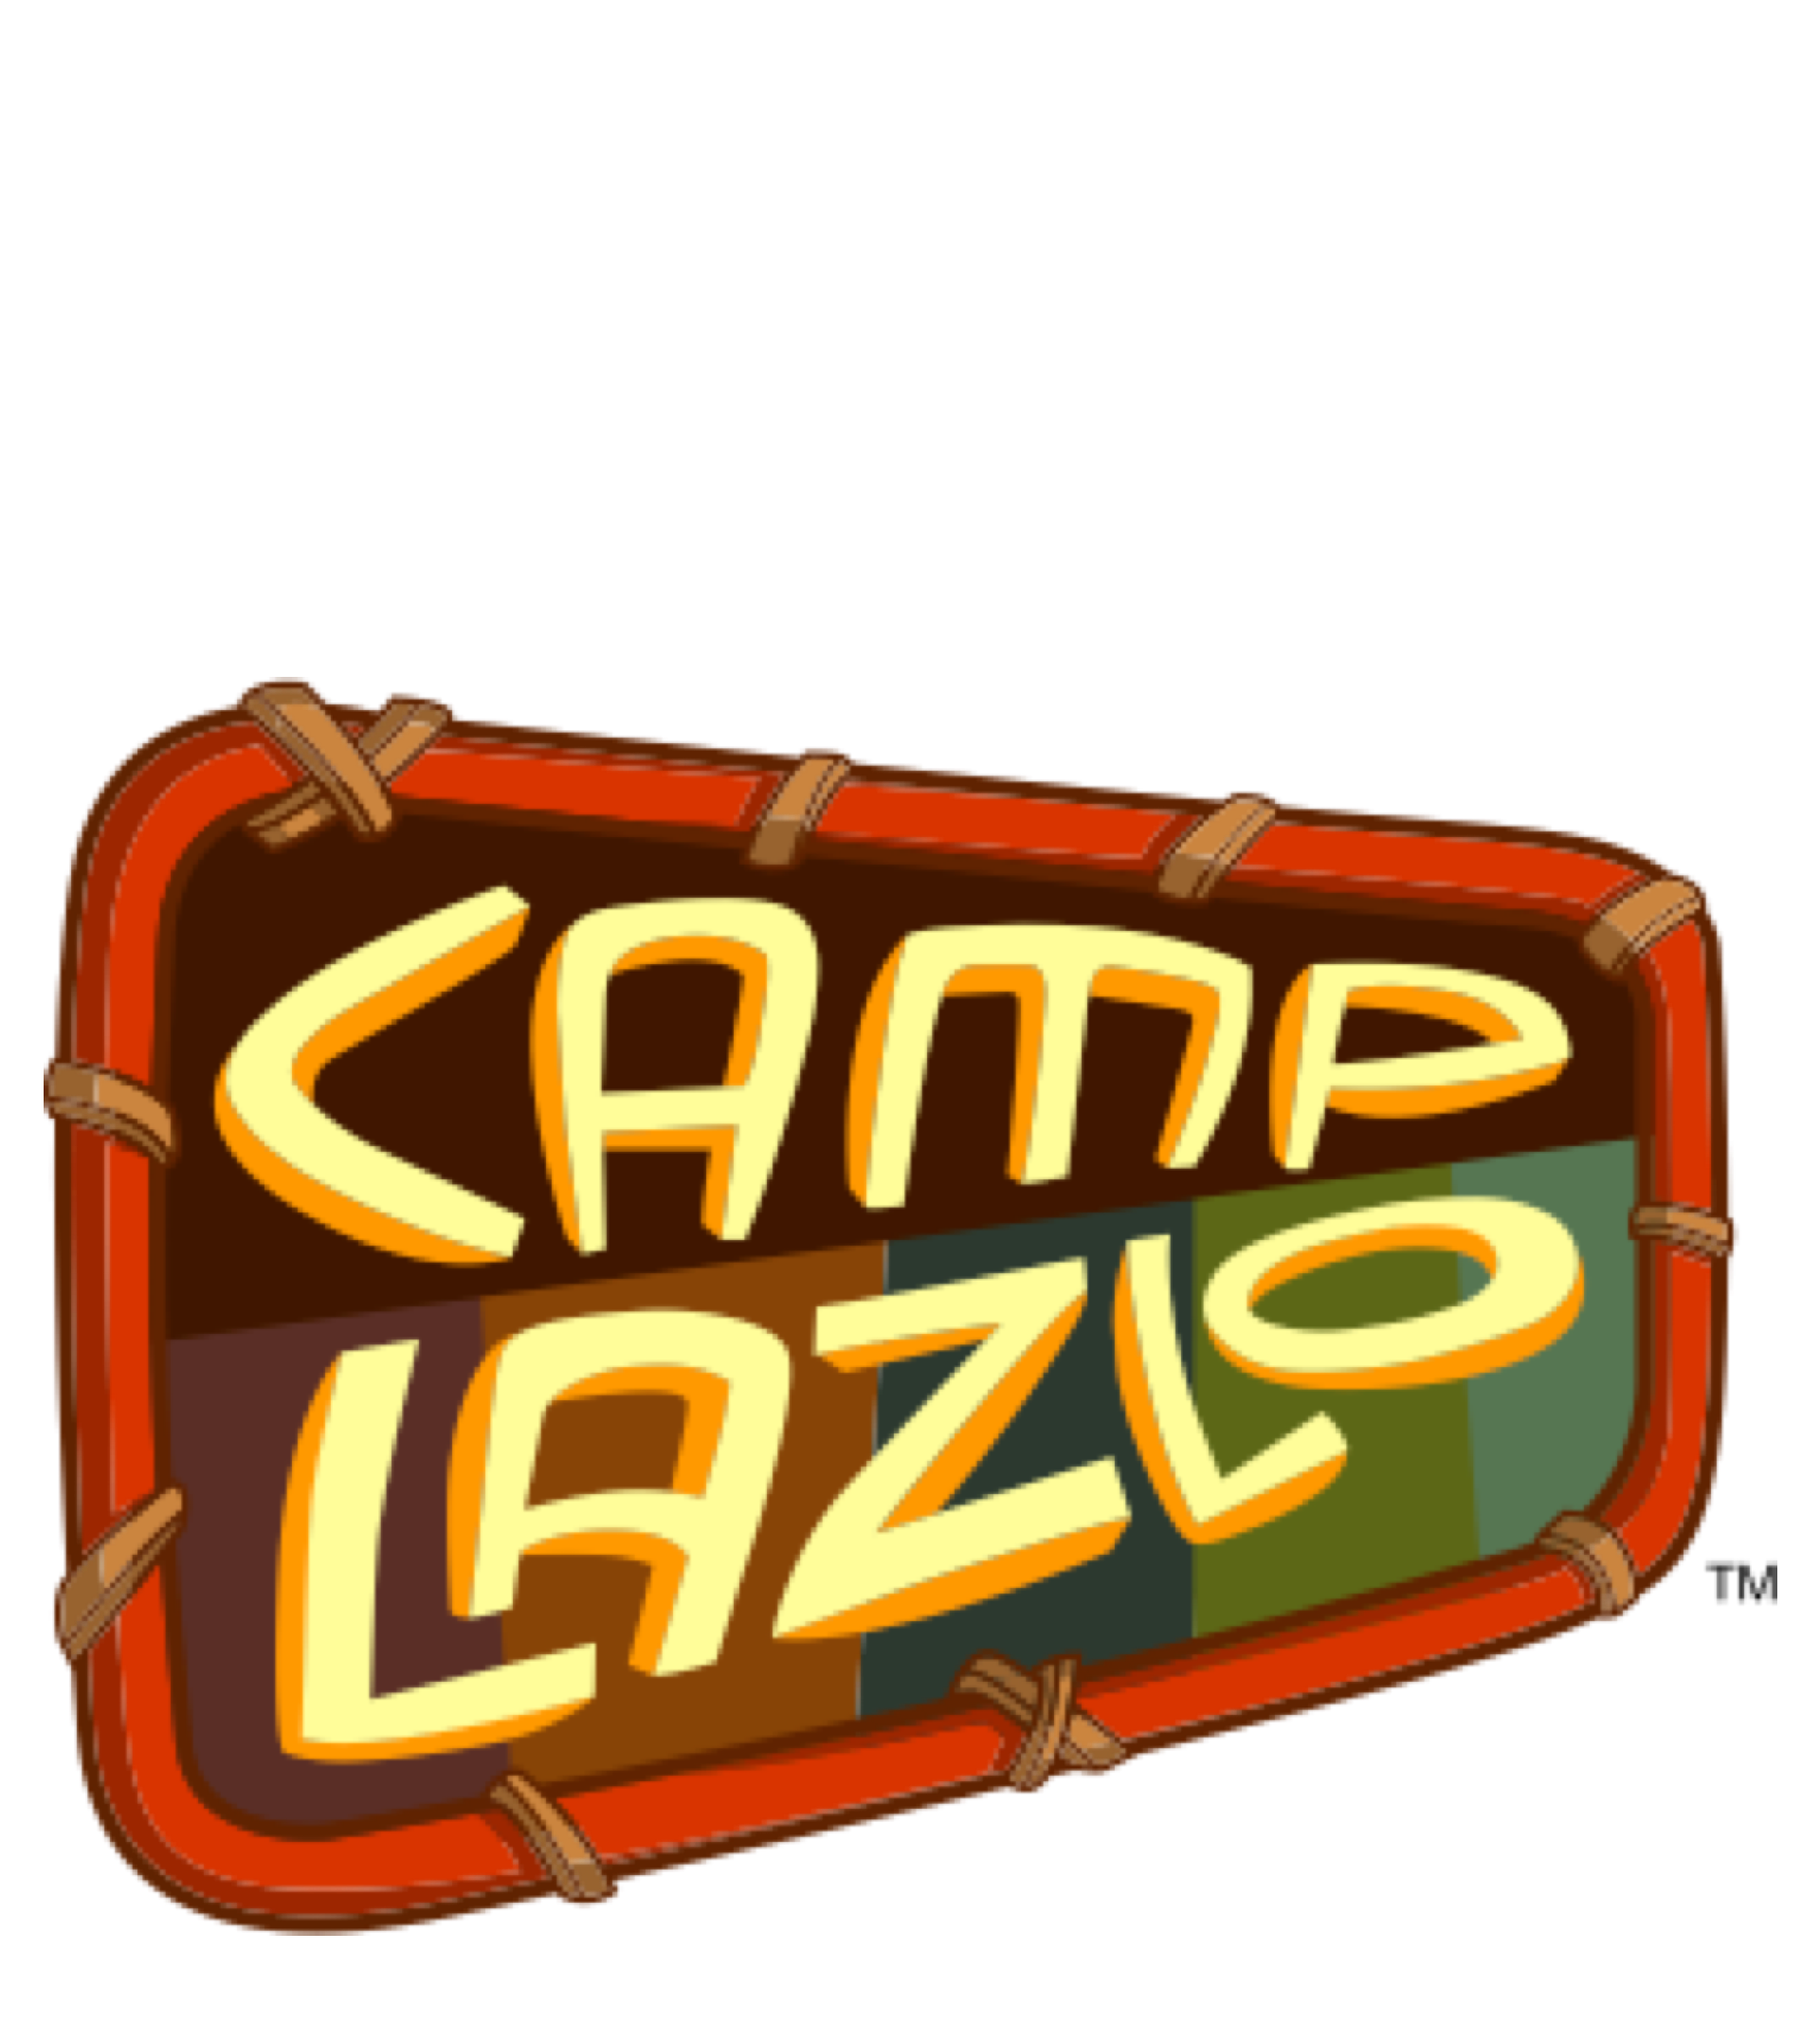 Camp lazlo logo